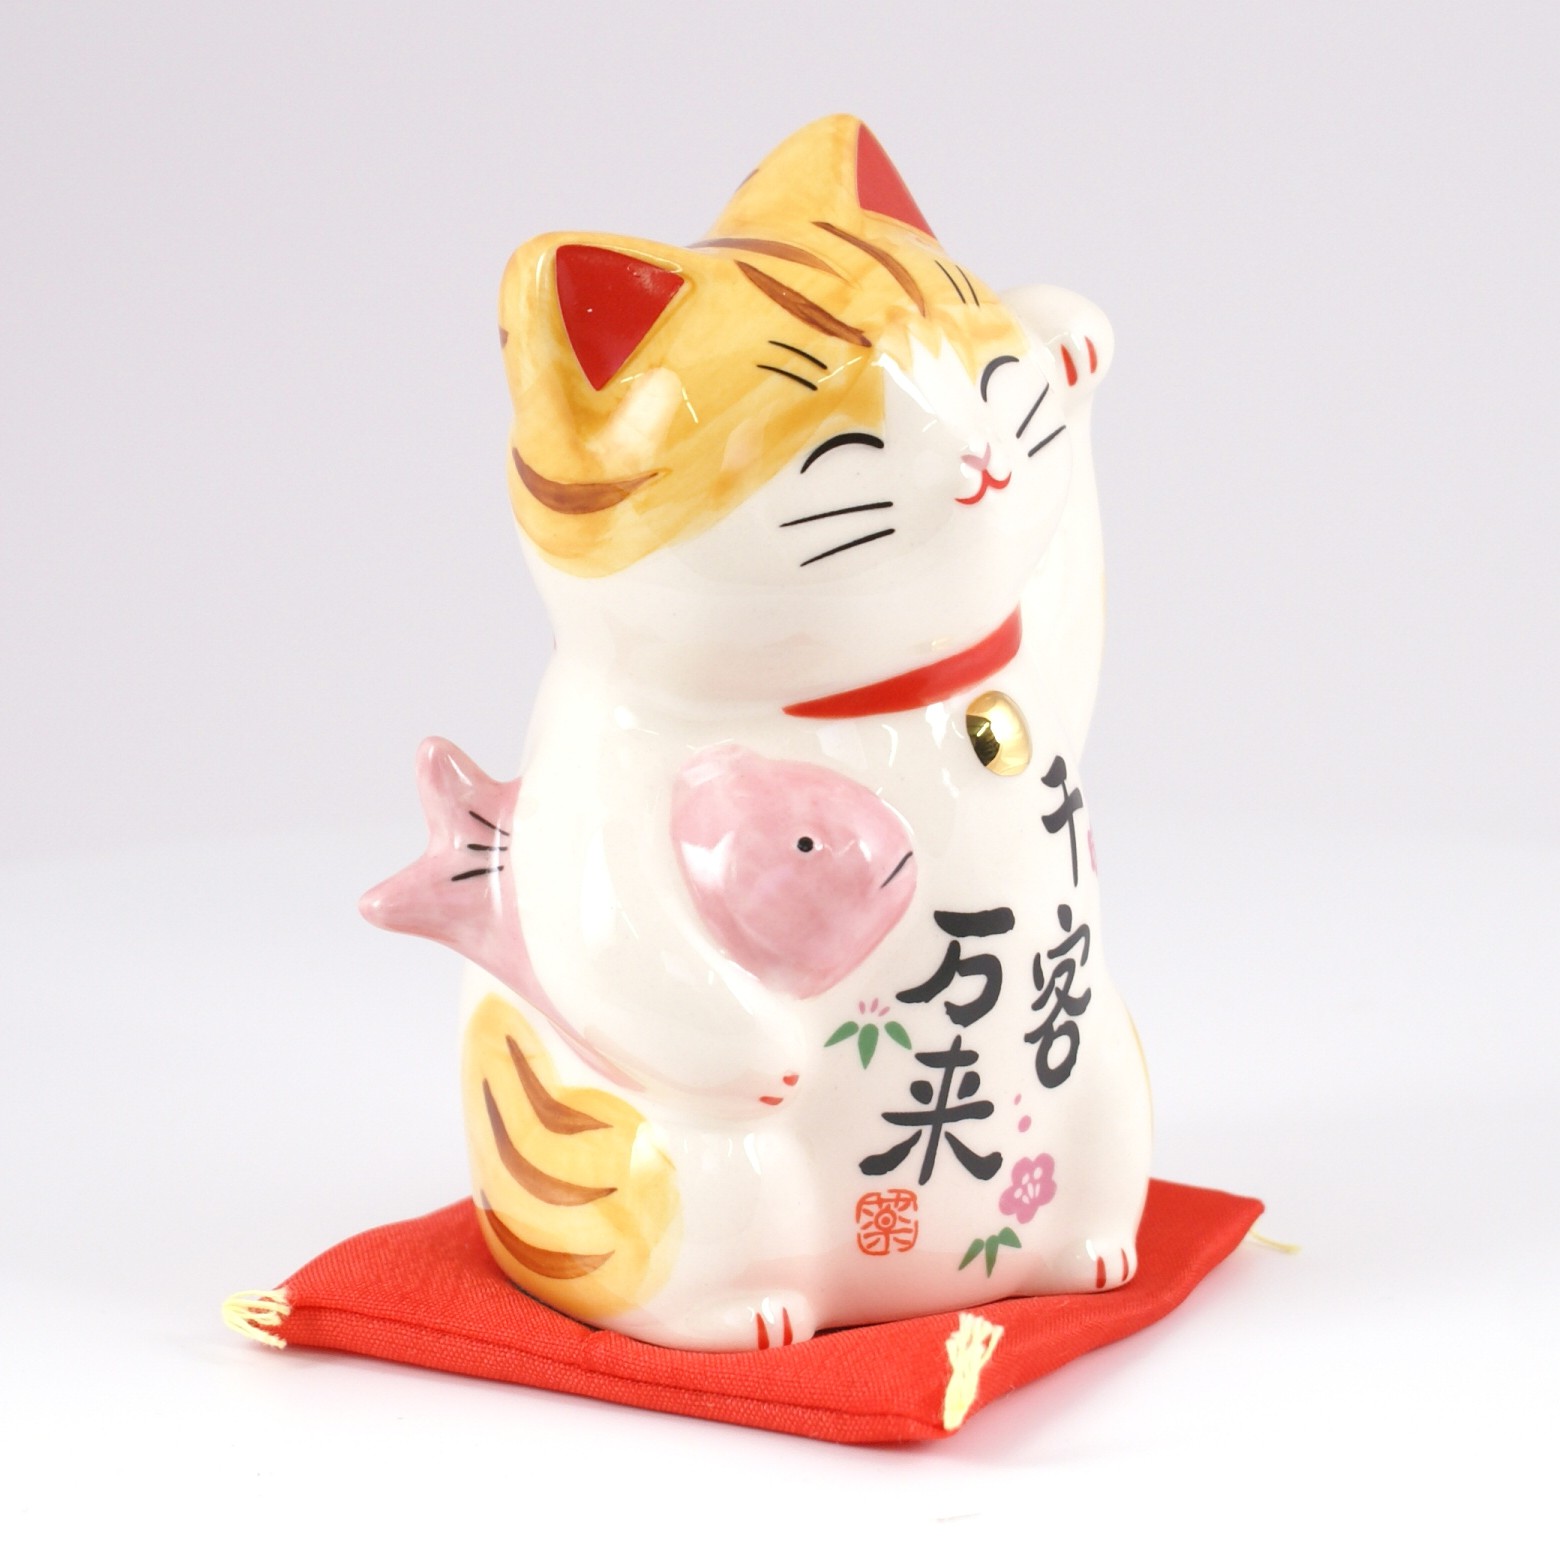 chat manekineko porte-bonheur japonais, SENKYAKUBANRAI, patte gauche